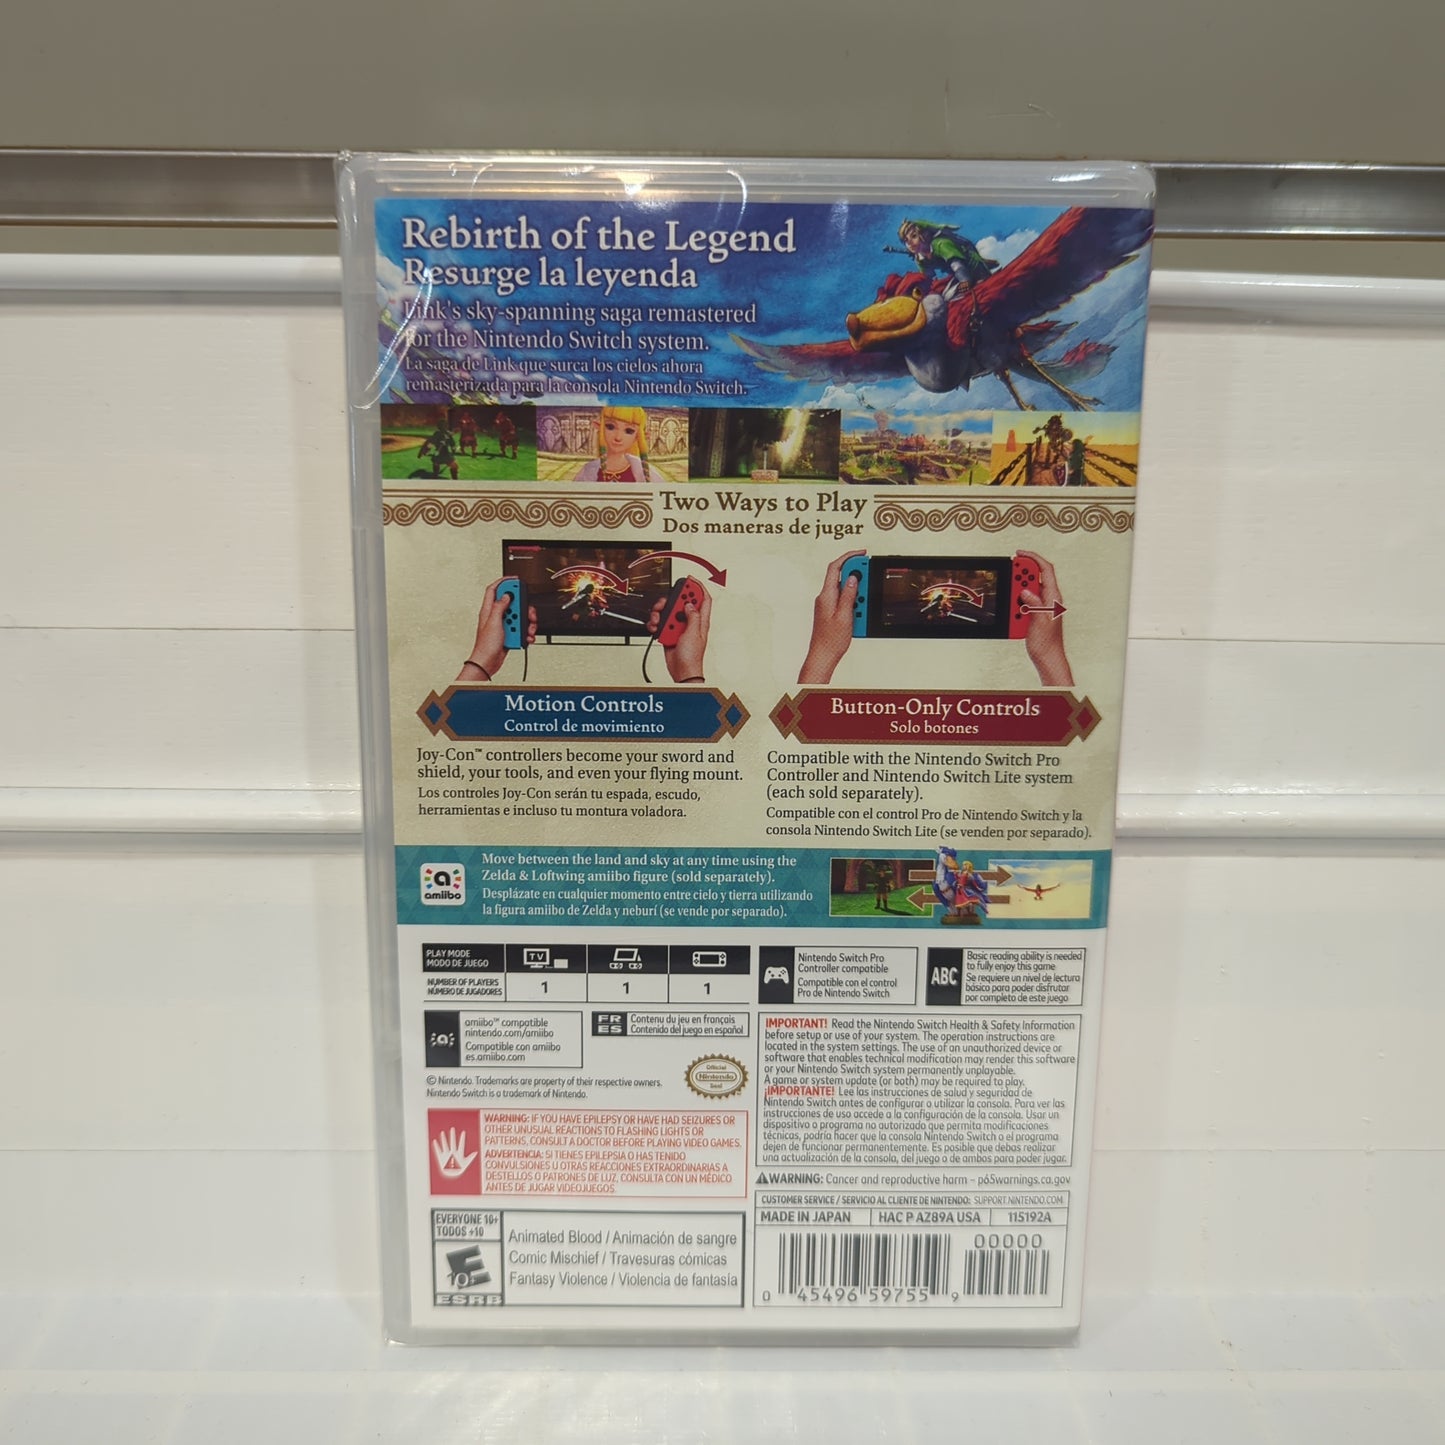 Zelda: Skyward Sword HD - Nintendo Switch